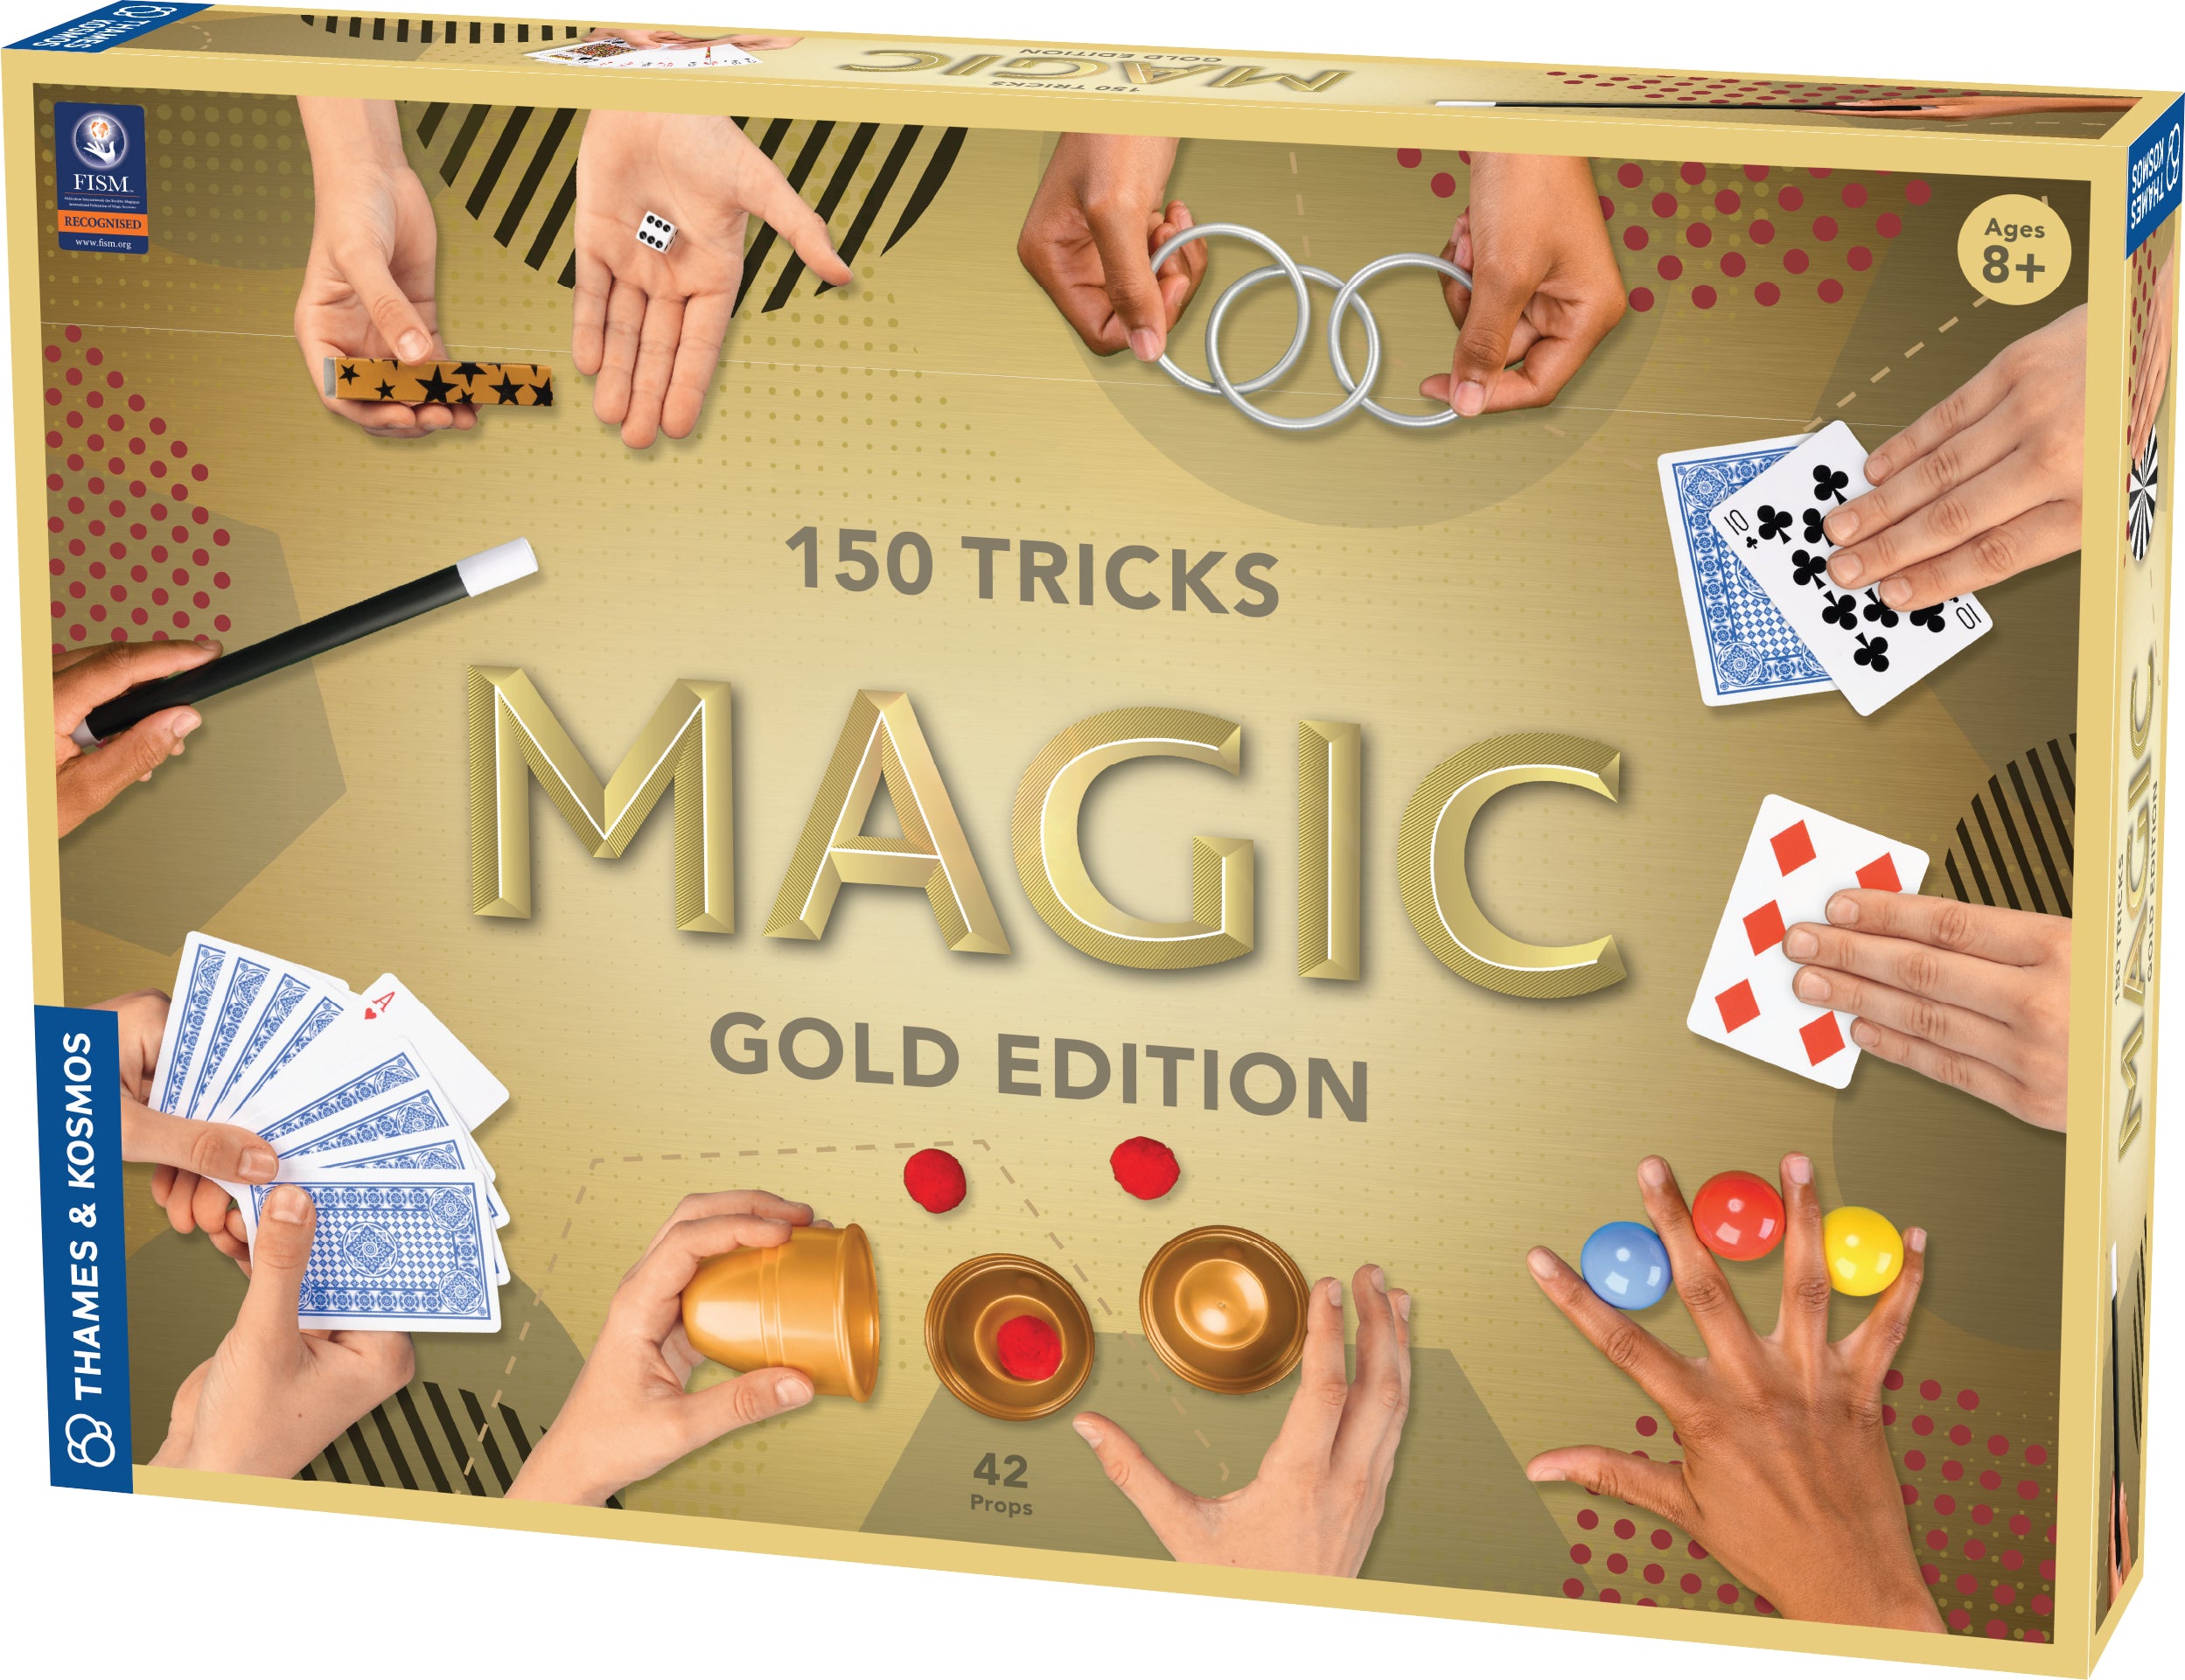 Gold Edition Magic - 150 Tricks    